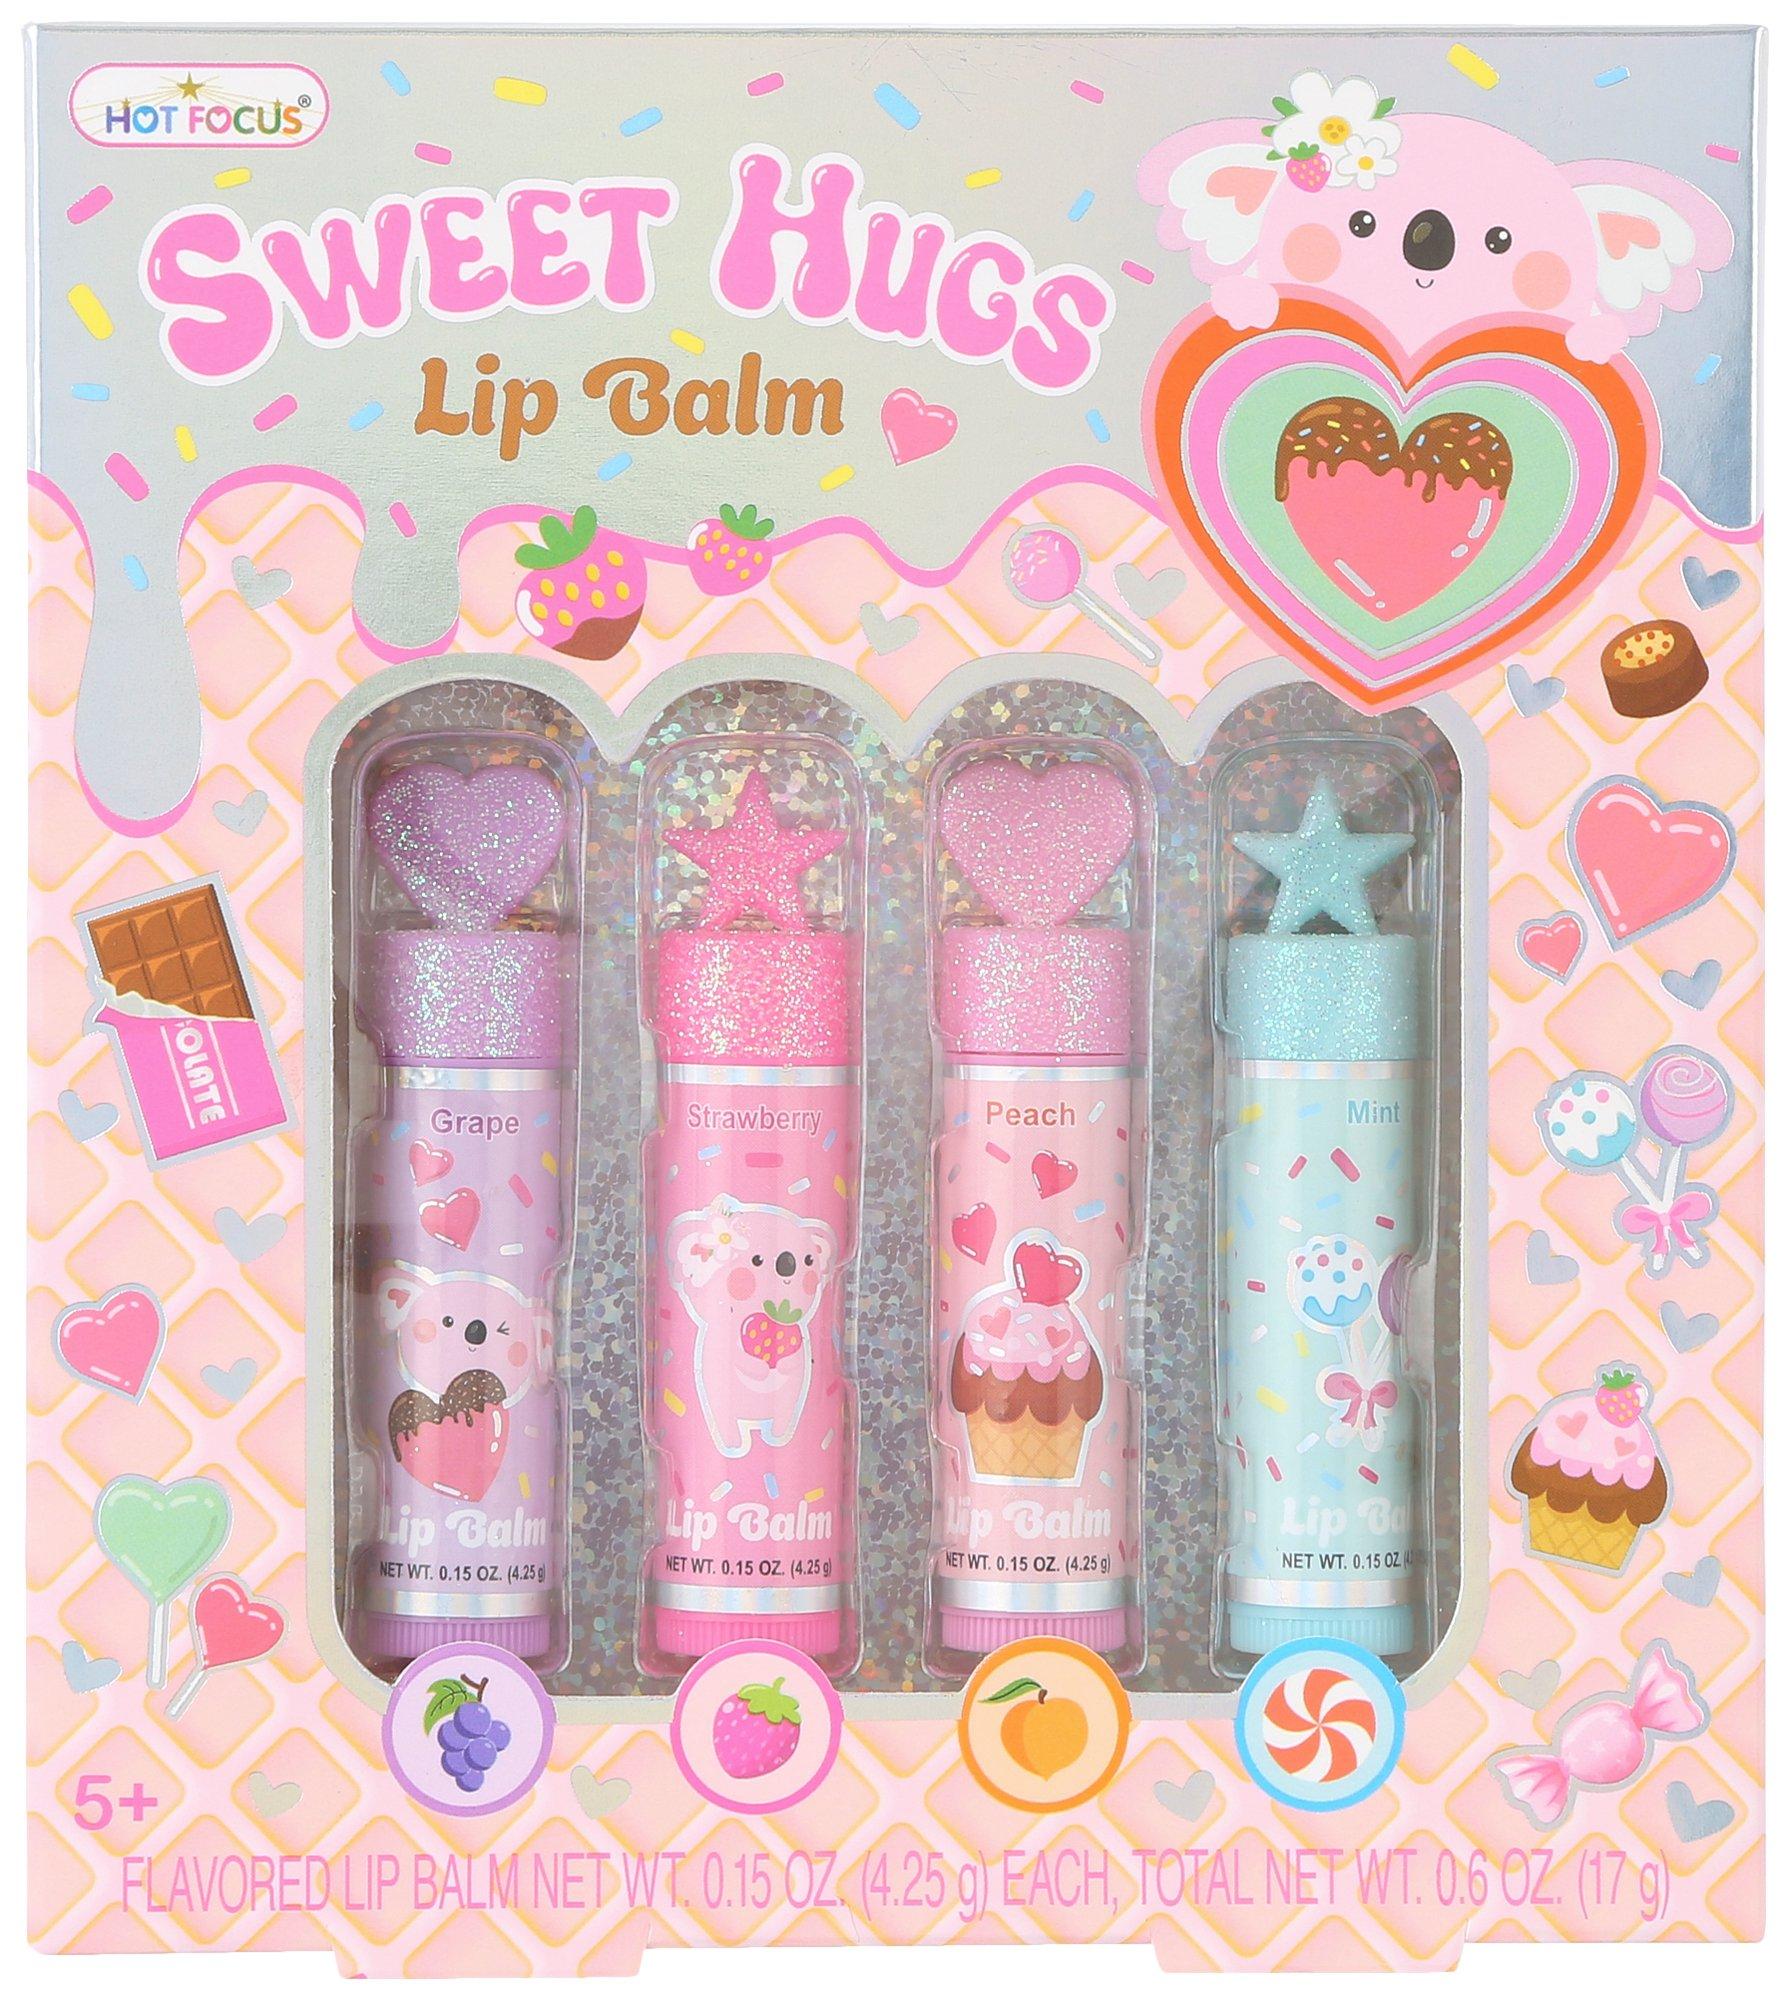 Girls 4-Pc. Sweet Hugs Lip Balms Set